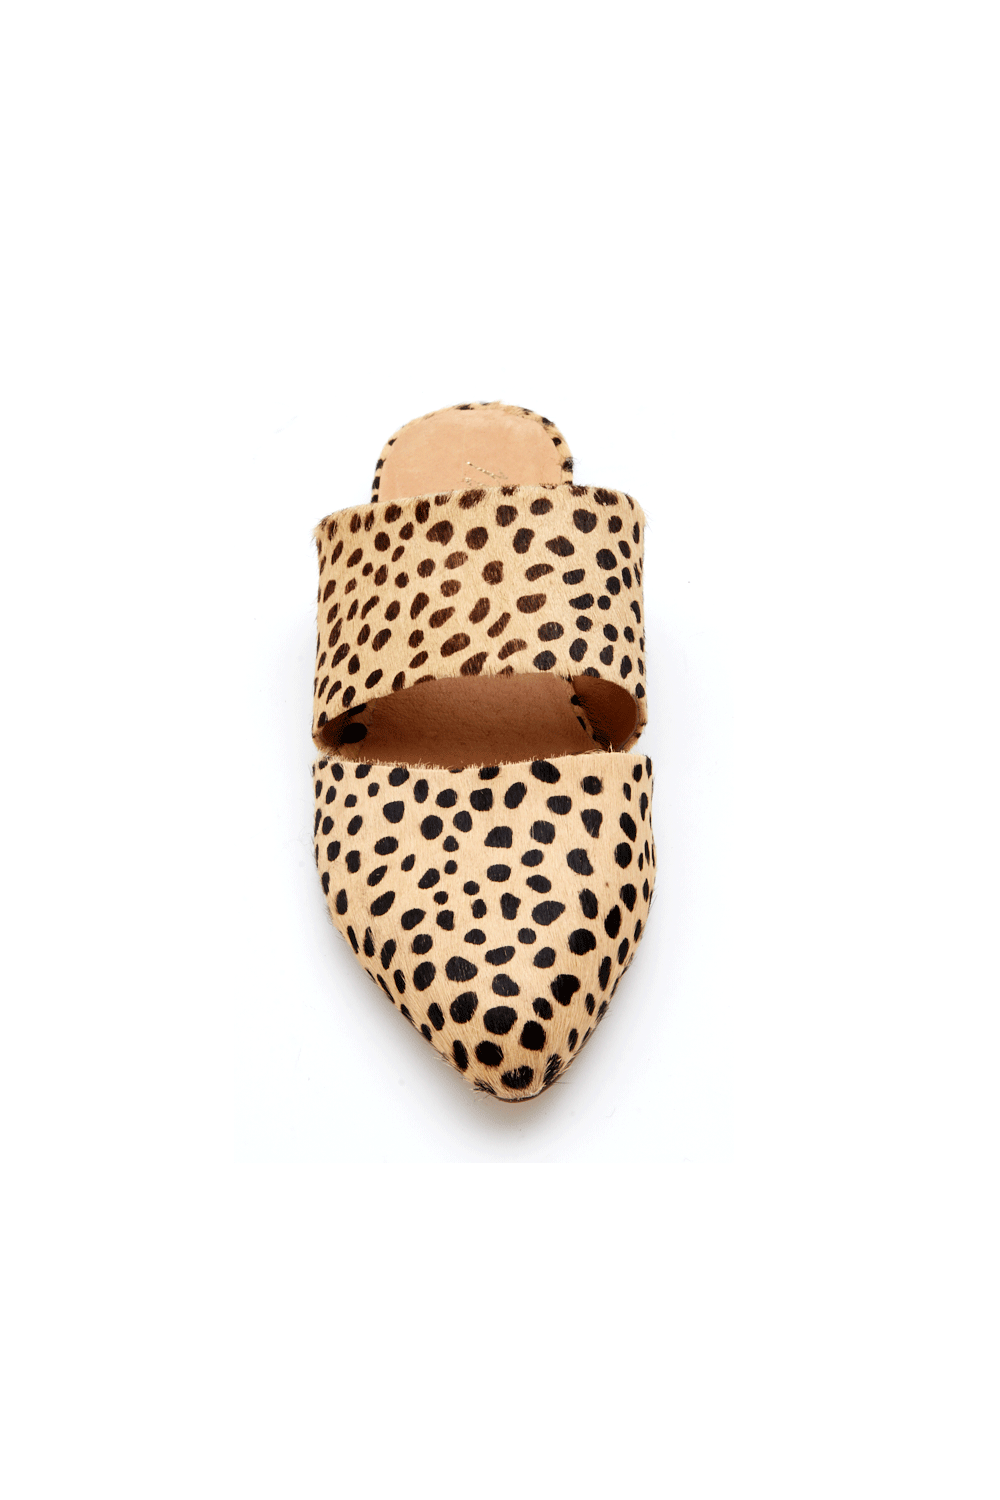 Matisse Berlin Slide - Cheetah - FINAL 